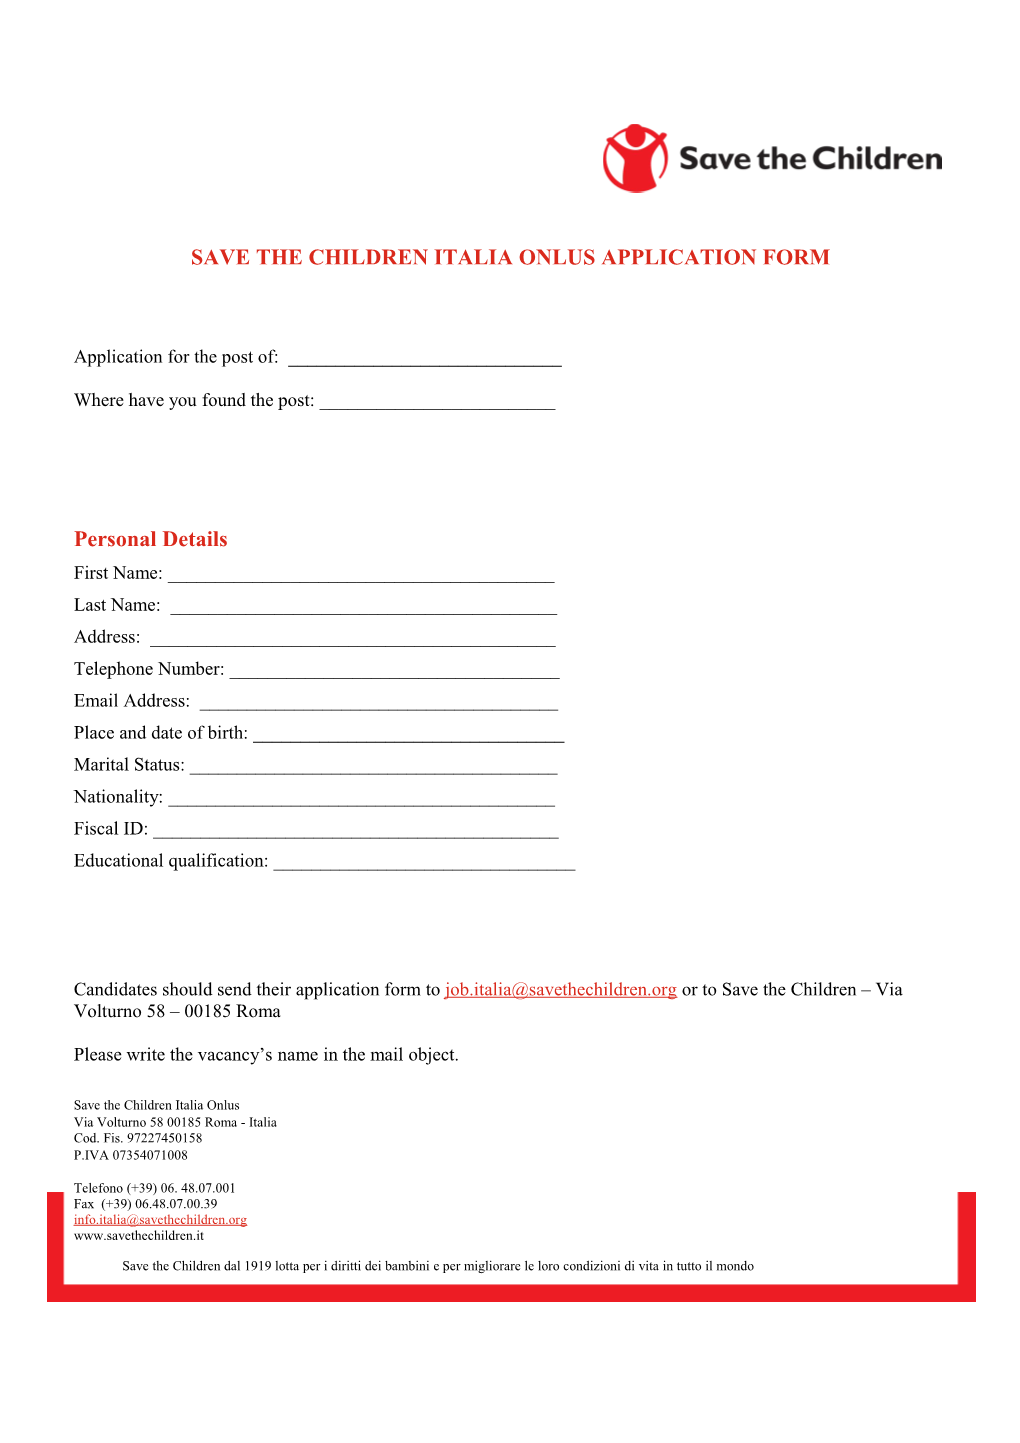 Save the Children Italia Onlus Application Form